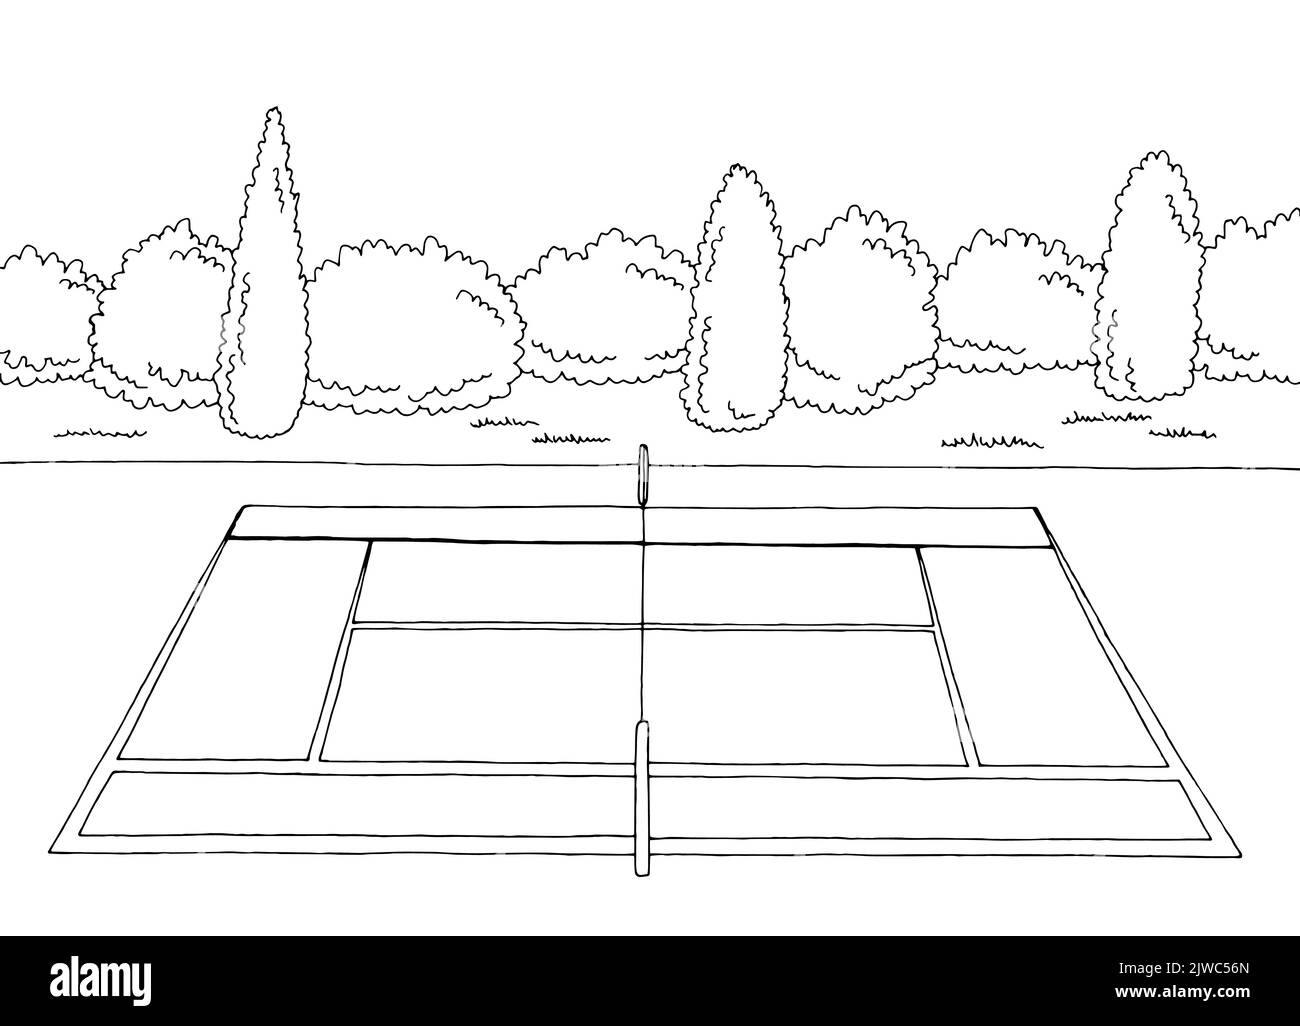 Tennis court sport graphic black white sketch illustration vector Stock Vector